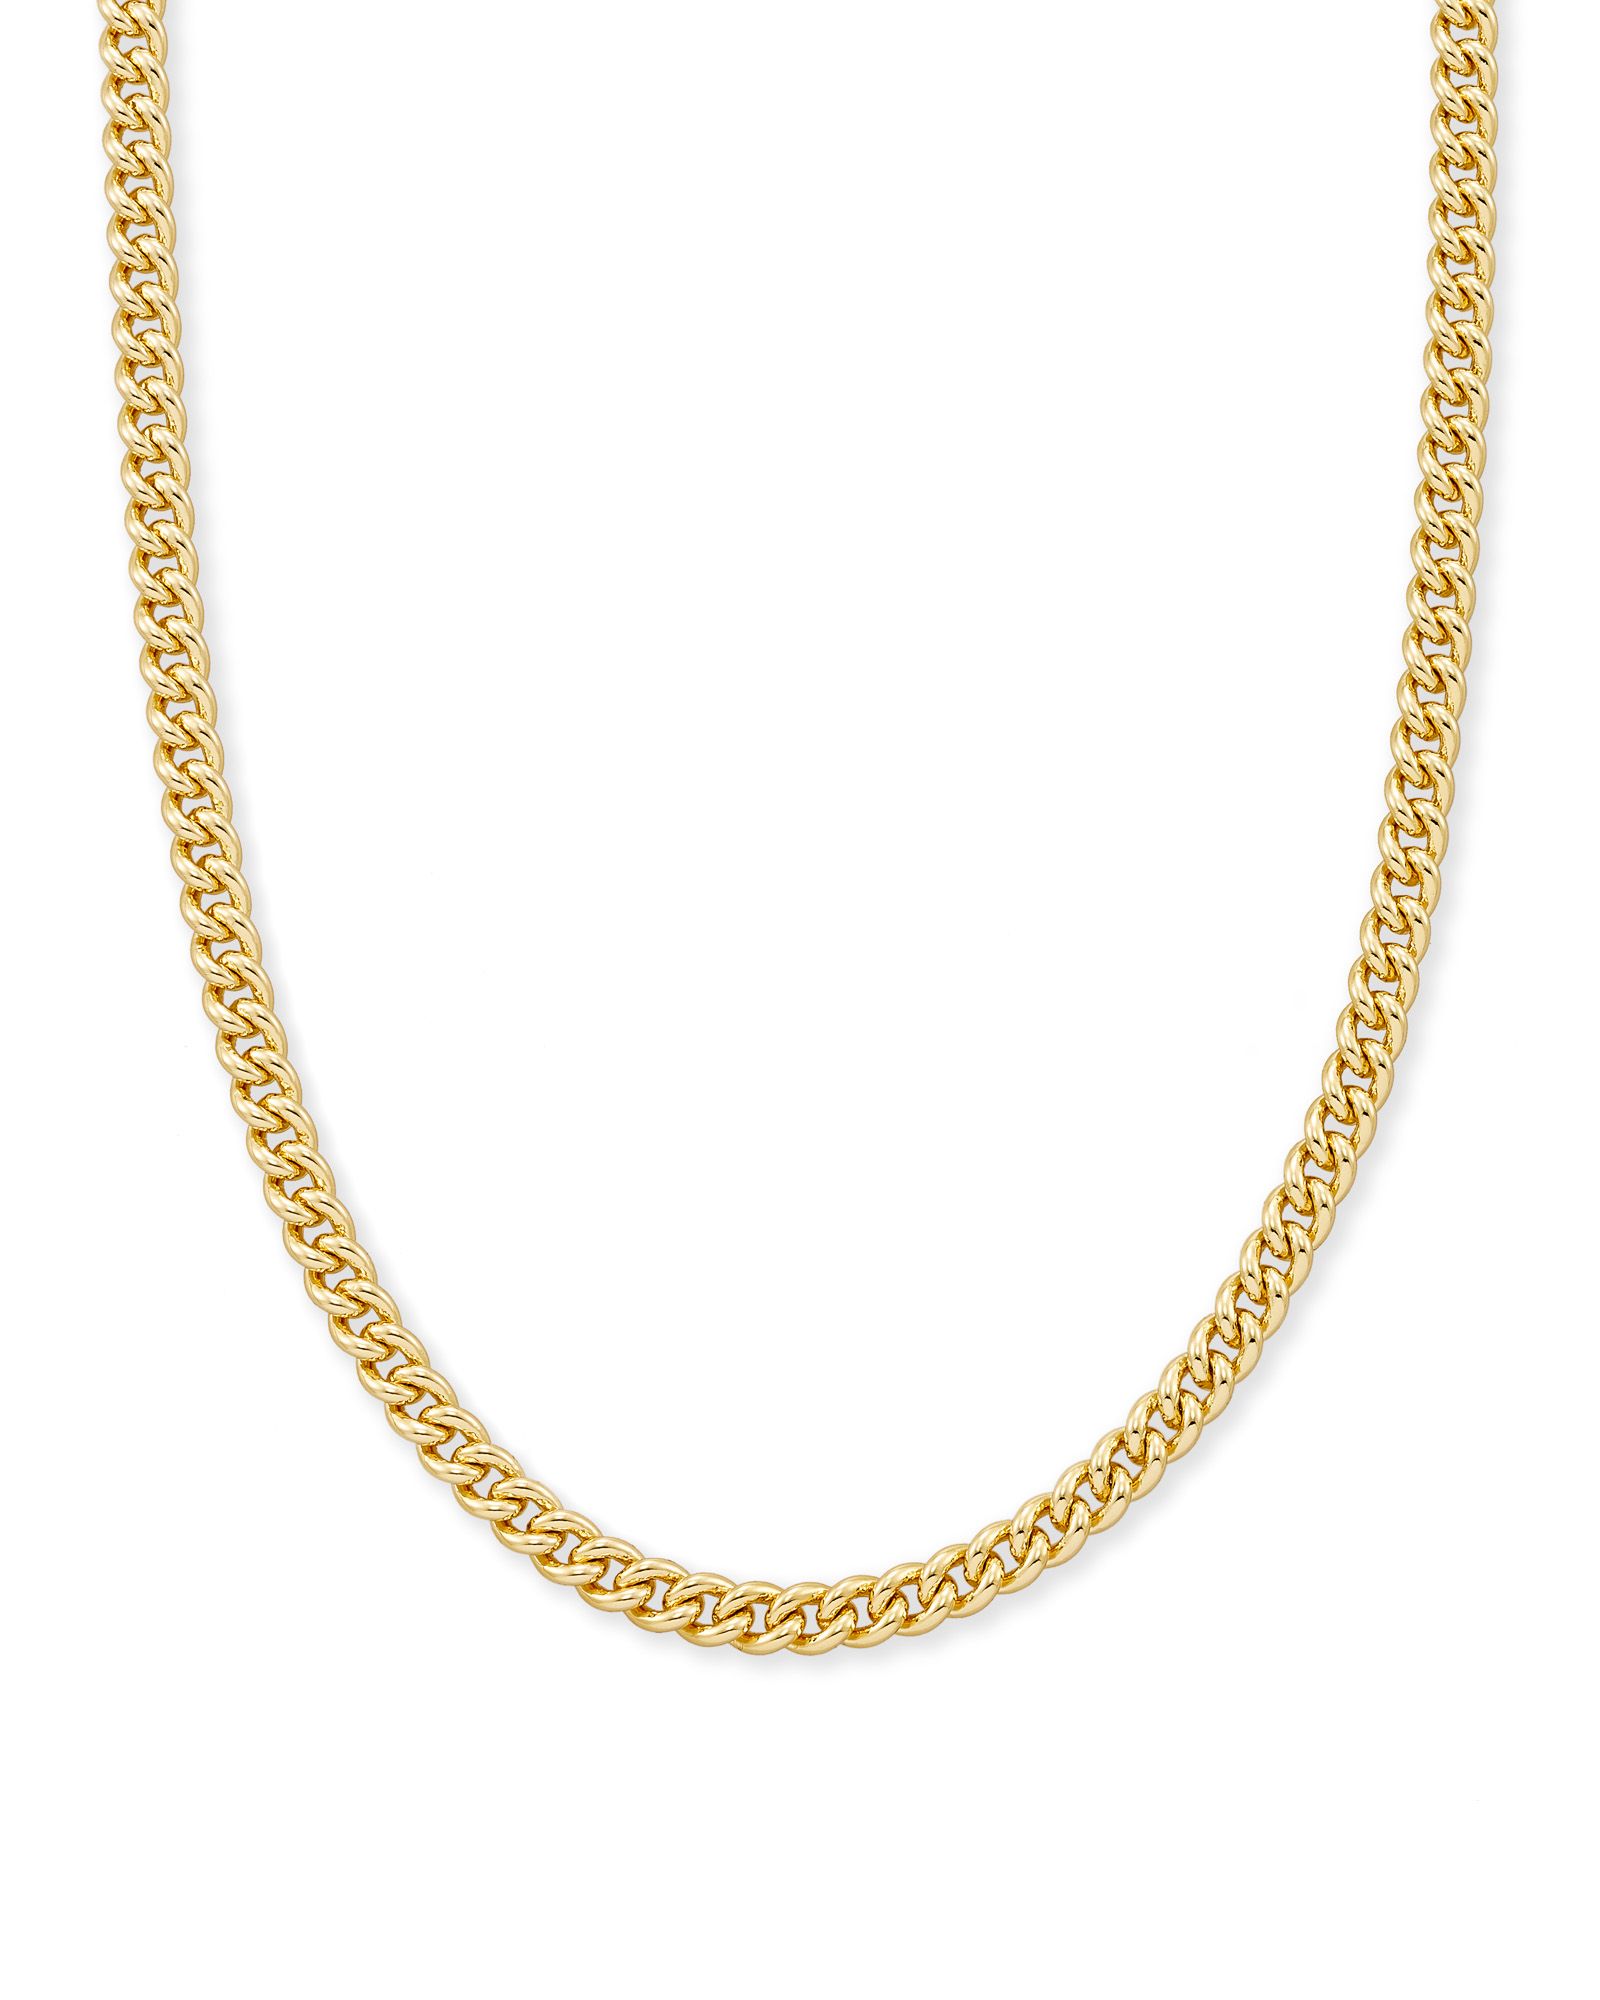 Ace Chain Necklace in Gold | Kendra Scott | Kendra Scott